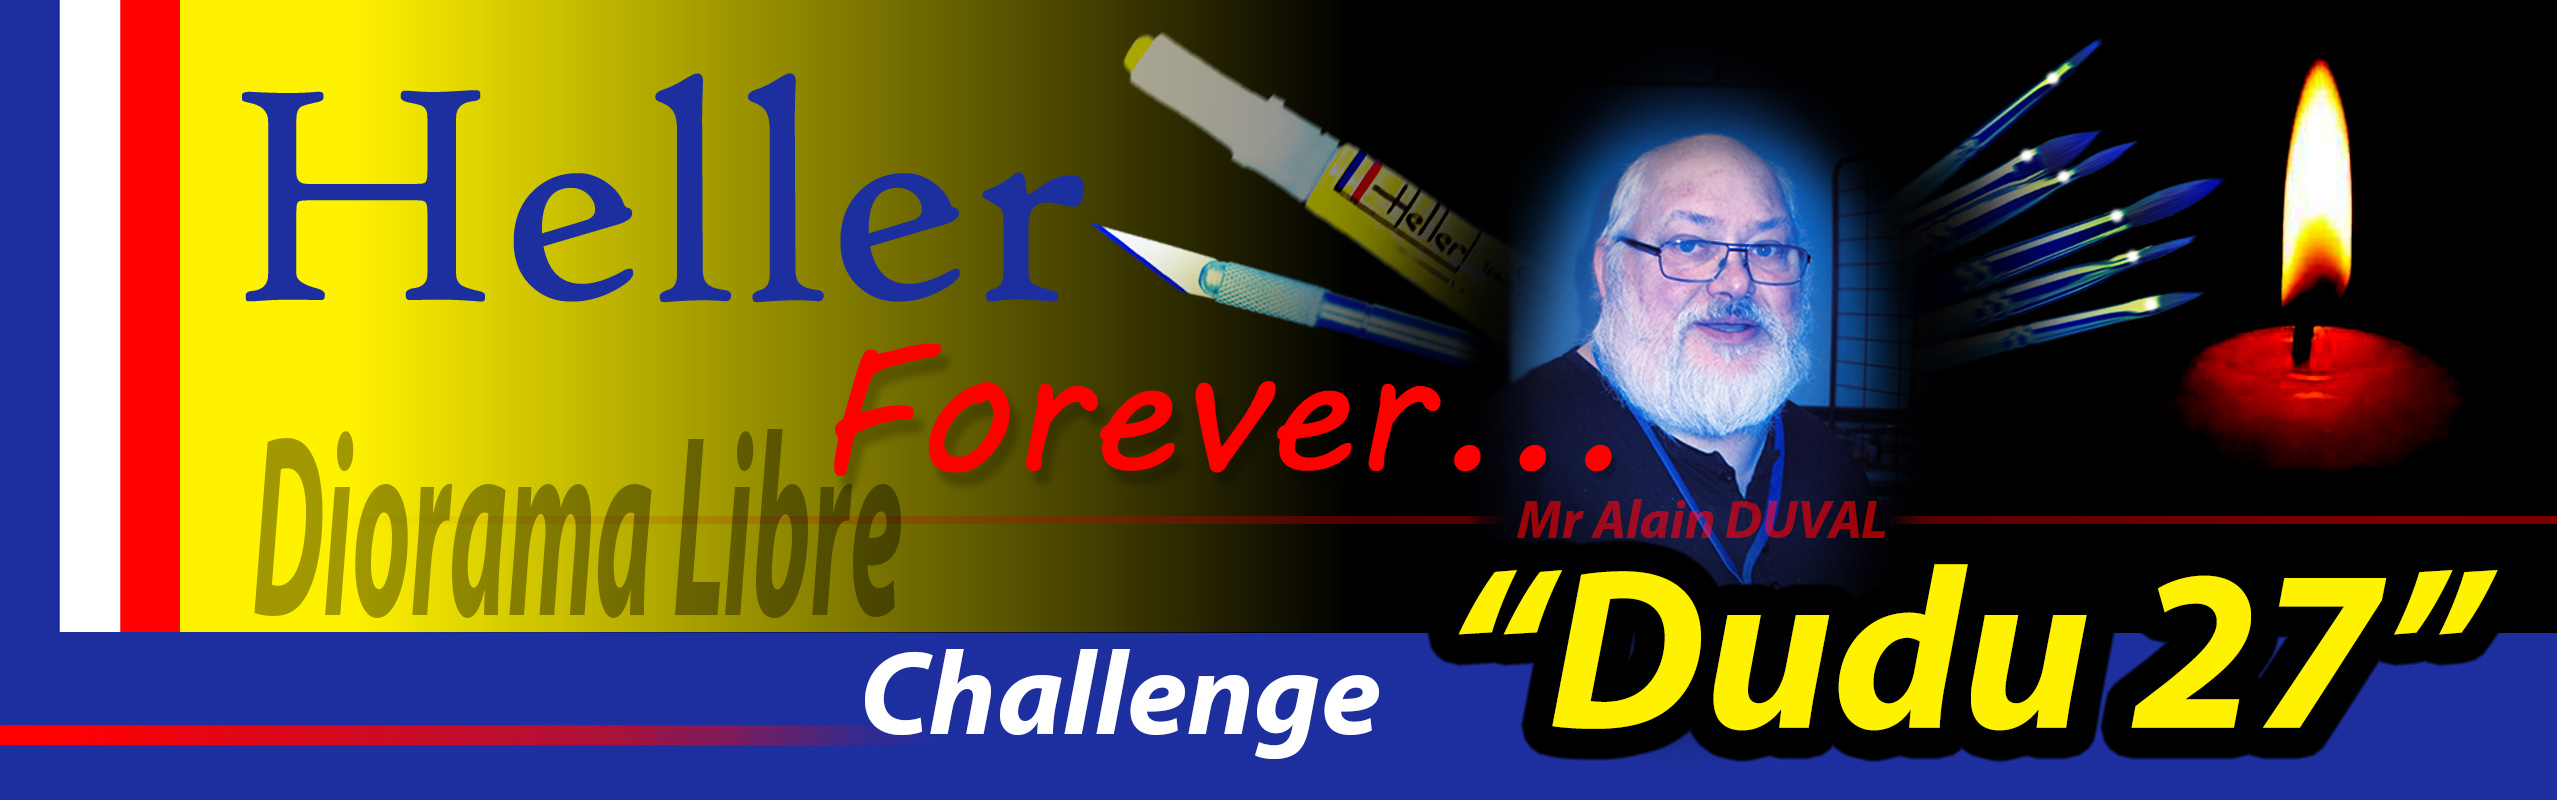 challenge "dudu27" Mr ALAIN DUVAL Banniz16